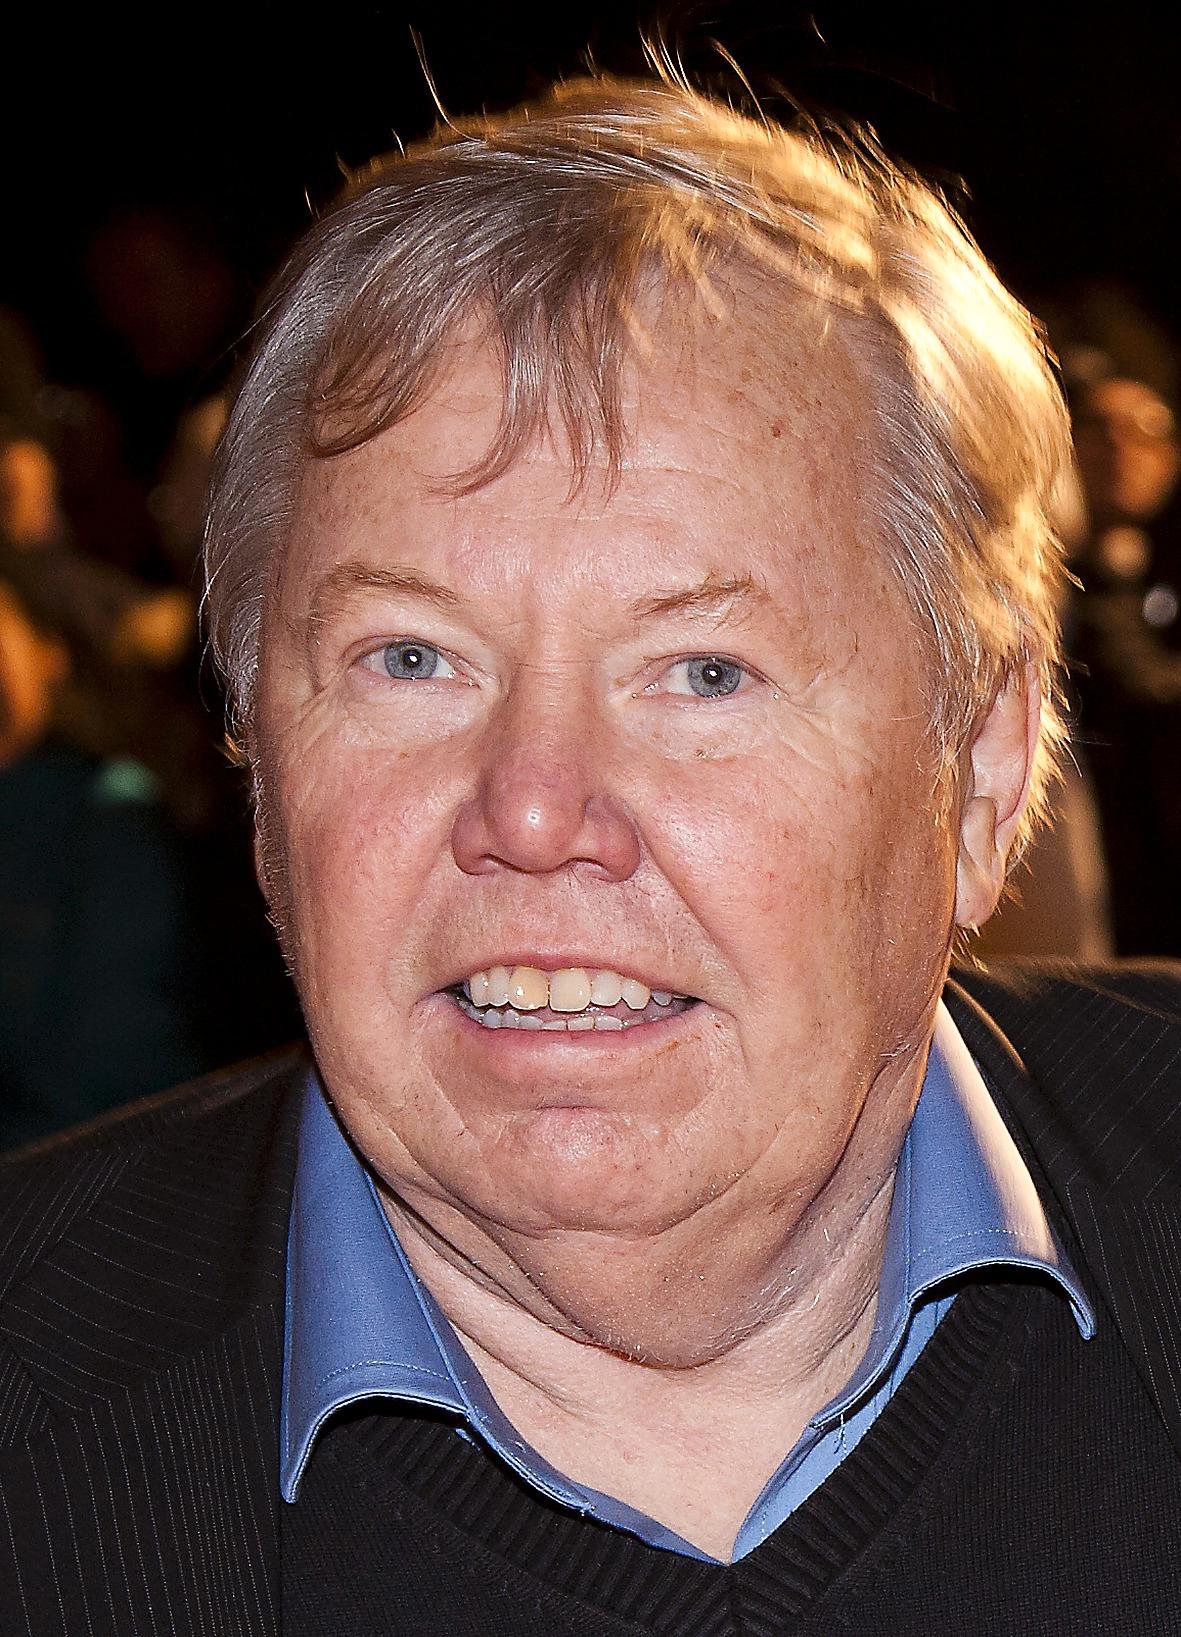 Bert Karlsson.